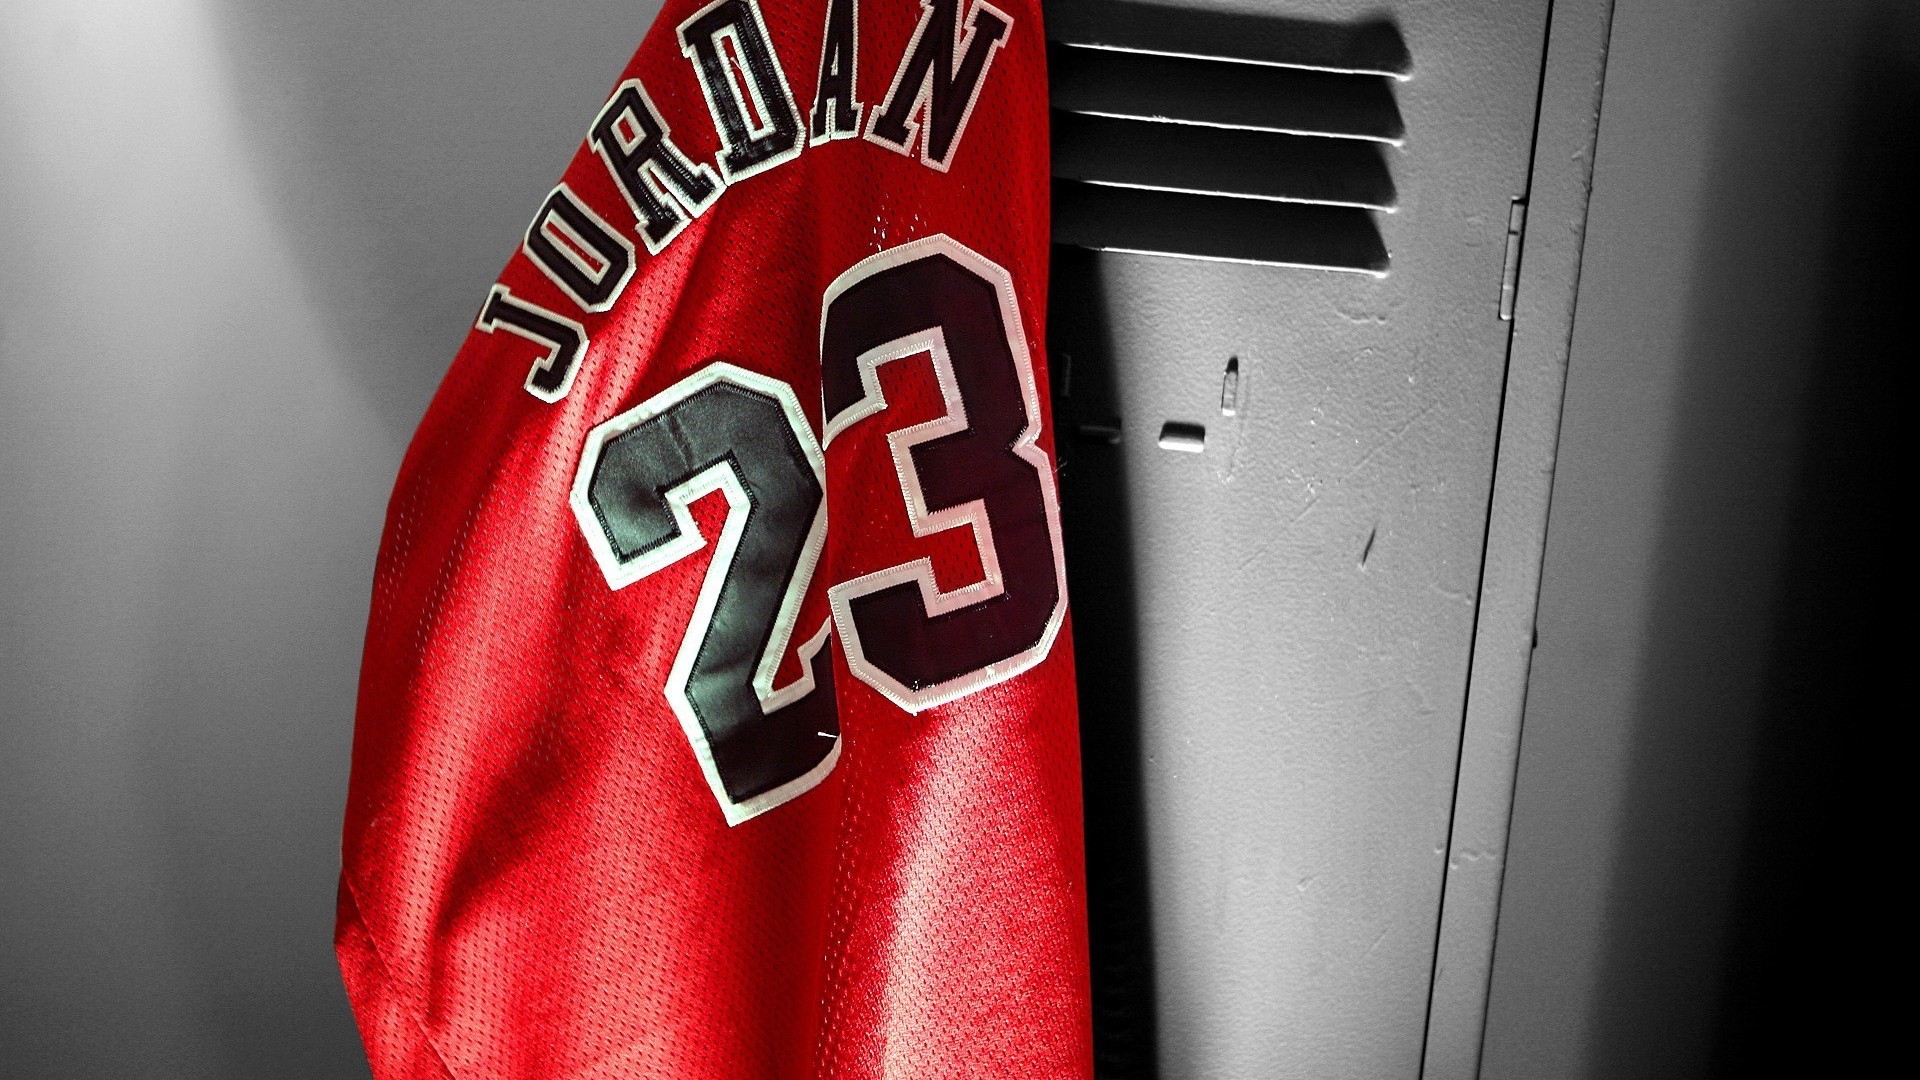 Michael Jordan Jersey Wallpapers - Wallpaper Cave